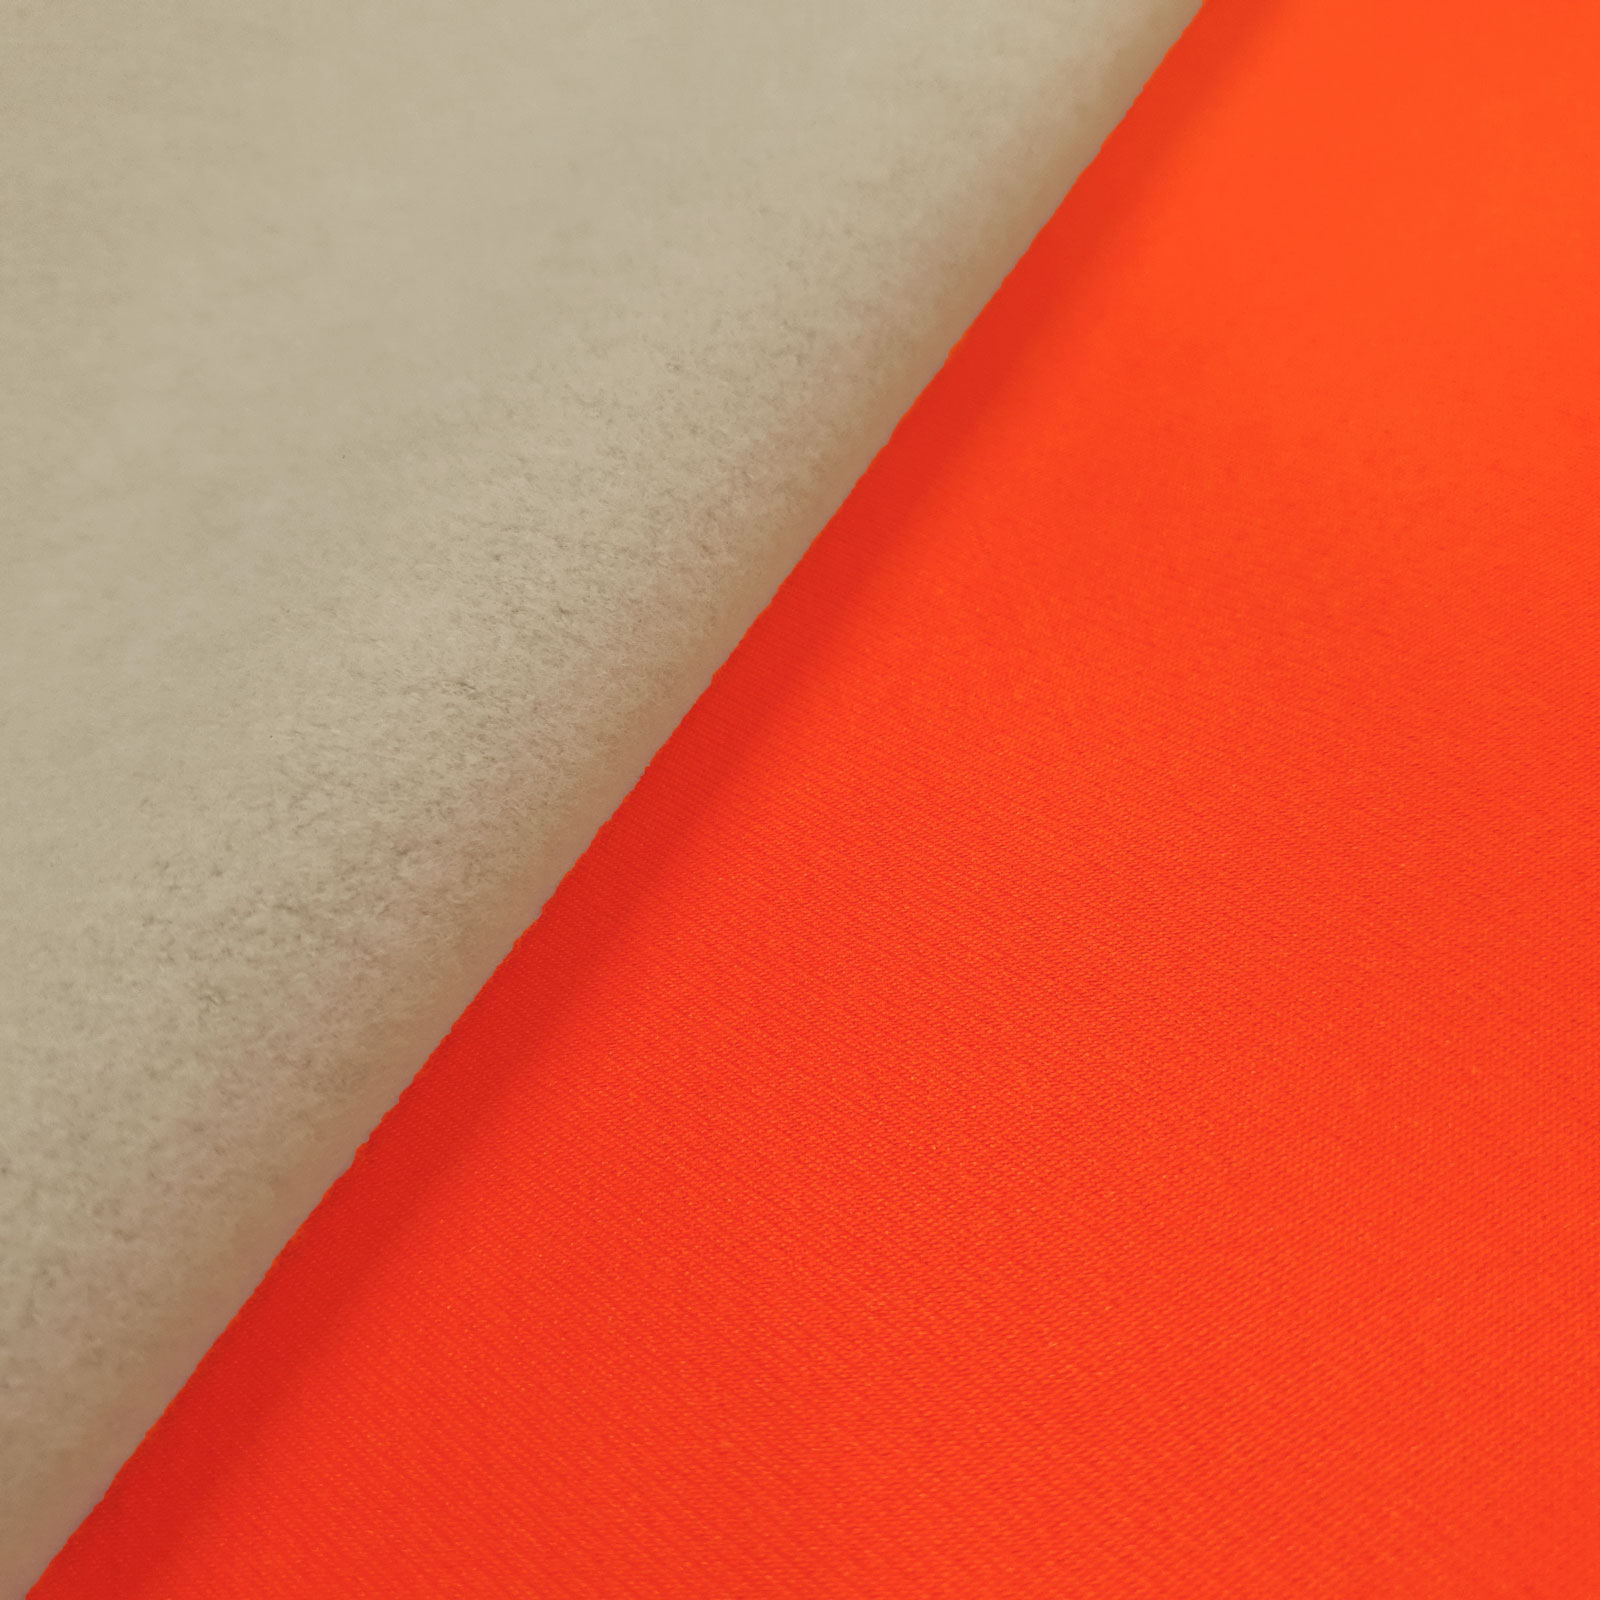 Taio - Softshell / Binding met wol - Neon oranje EN20471